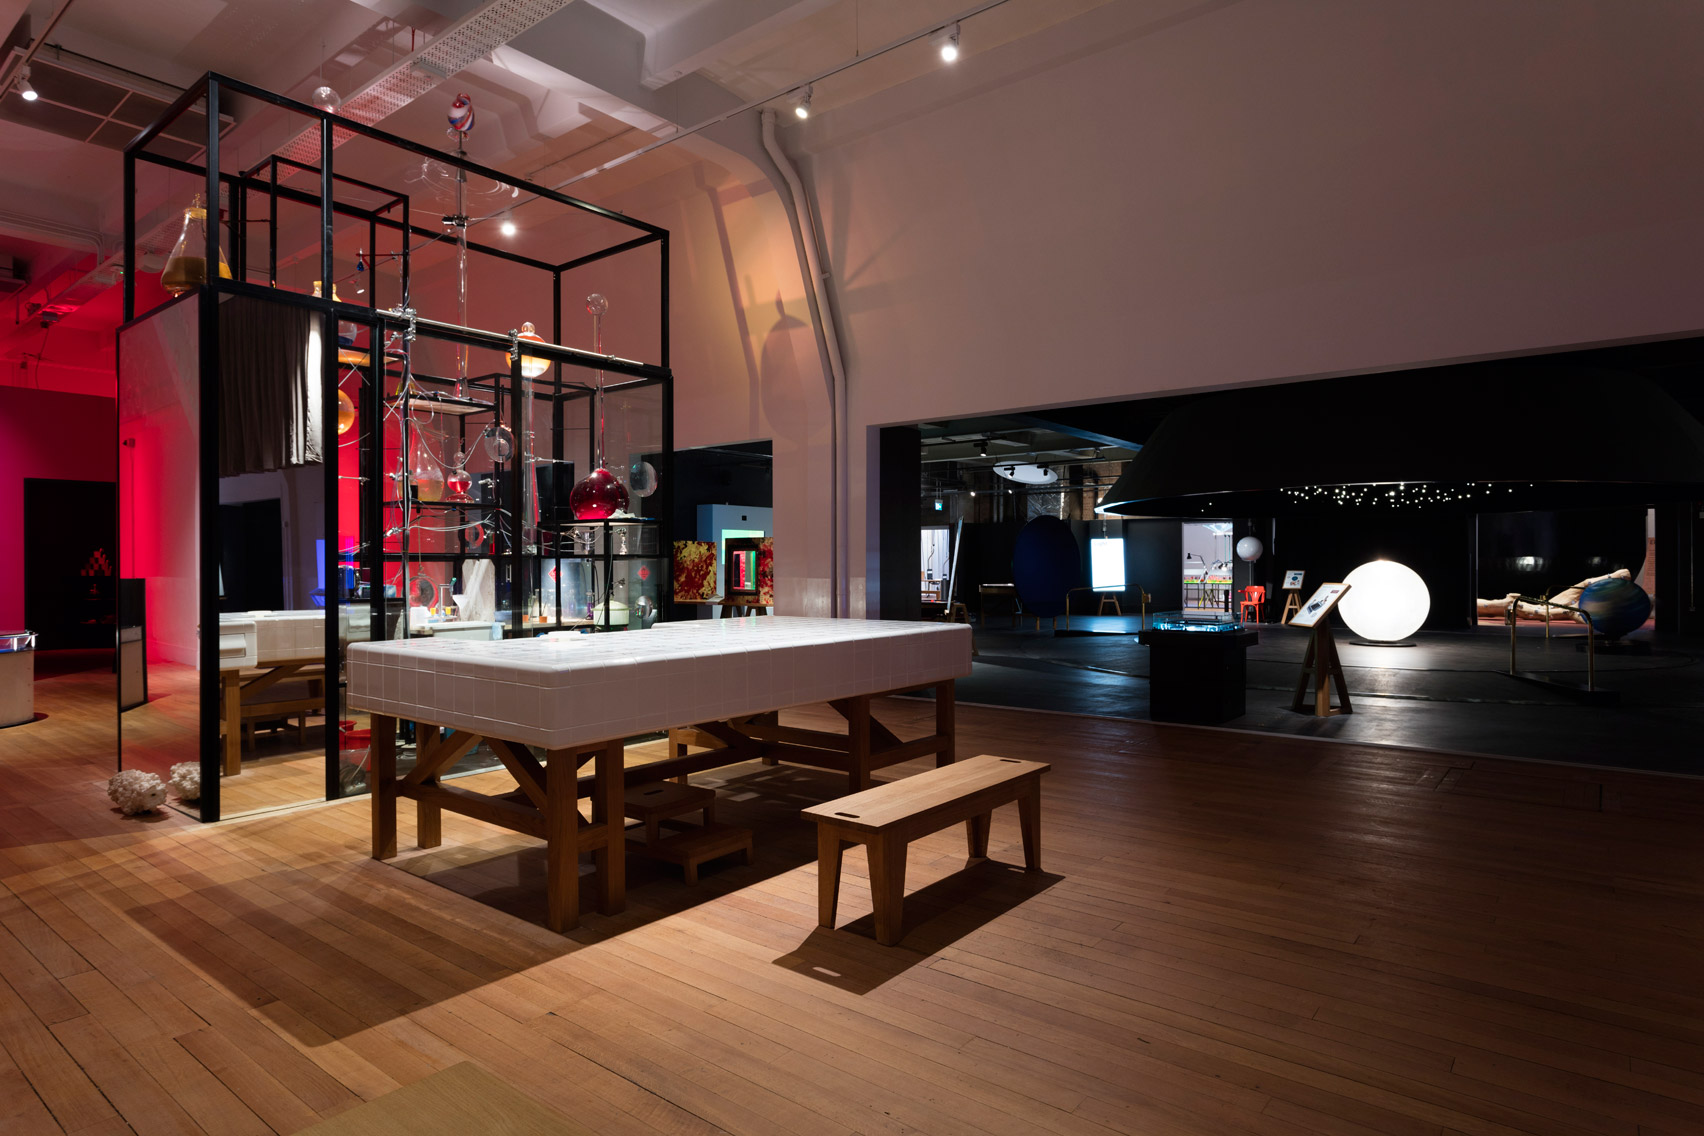 wonderlab-exhibition-interiors-design-science-museum-london-uk_dezeen_1704_col_3